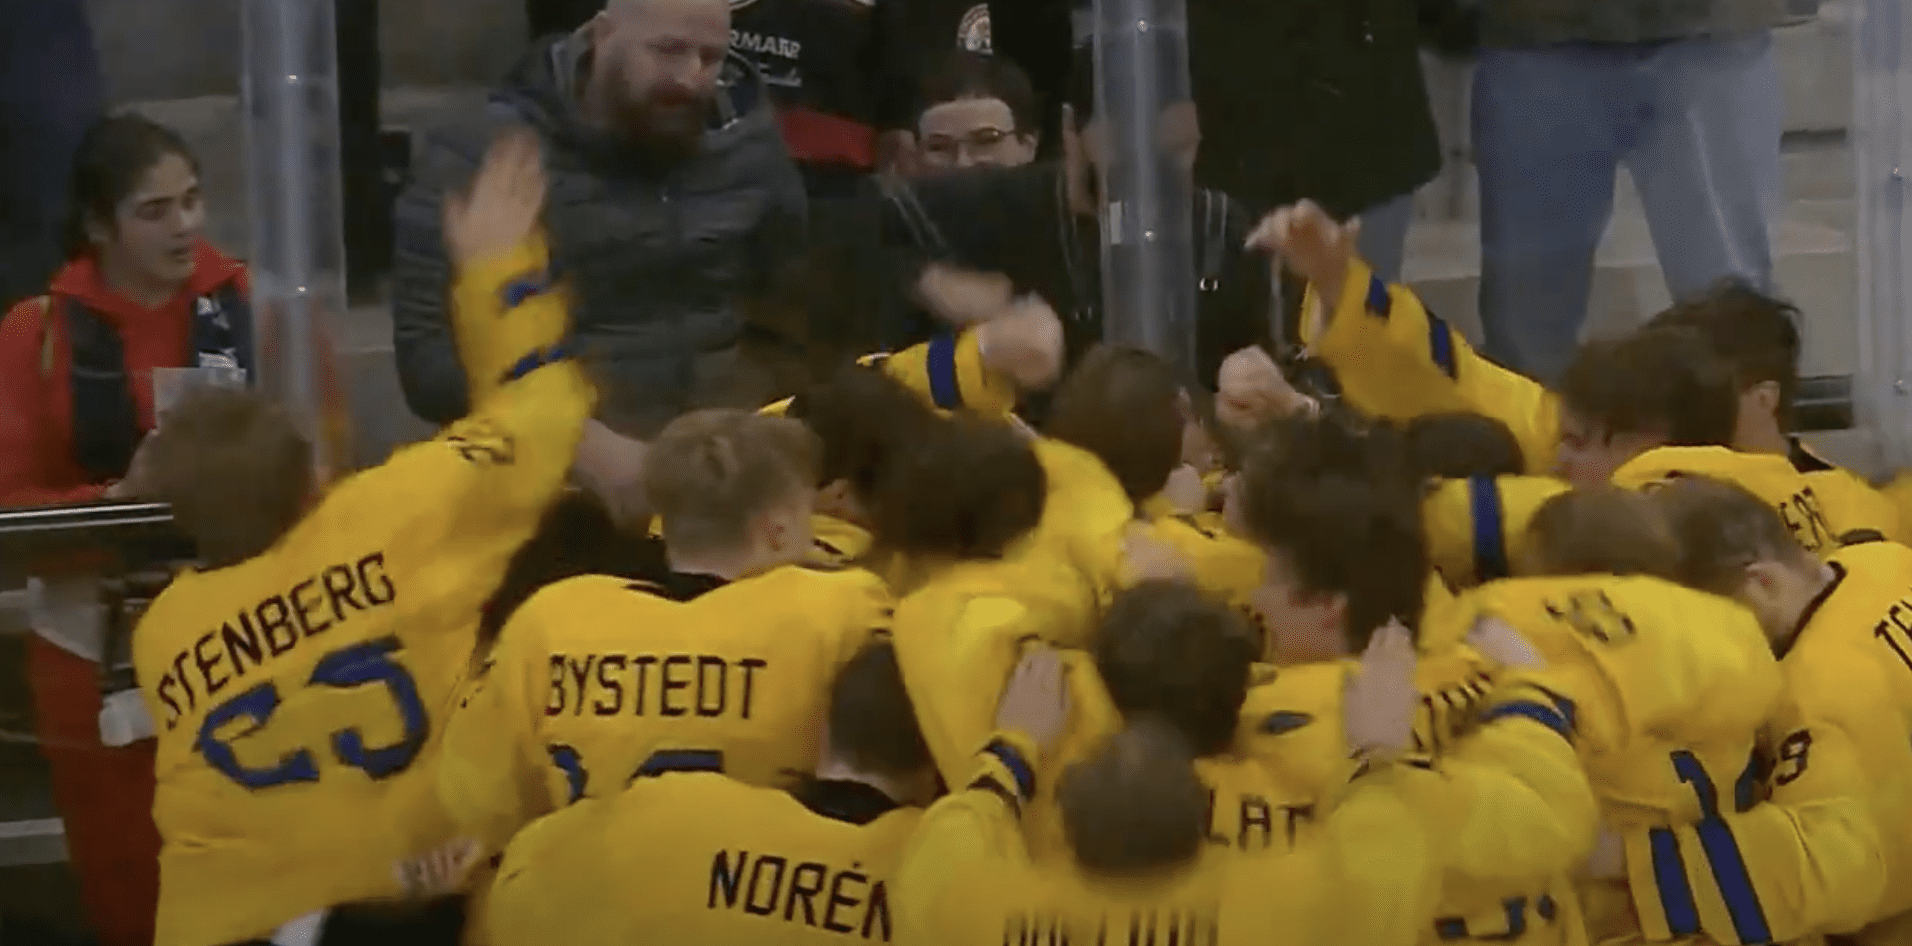 Under-18 World Championship: Sweden stuns U.S. for gold, Finland takes bronze